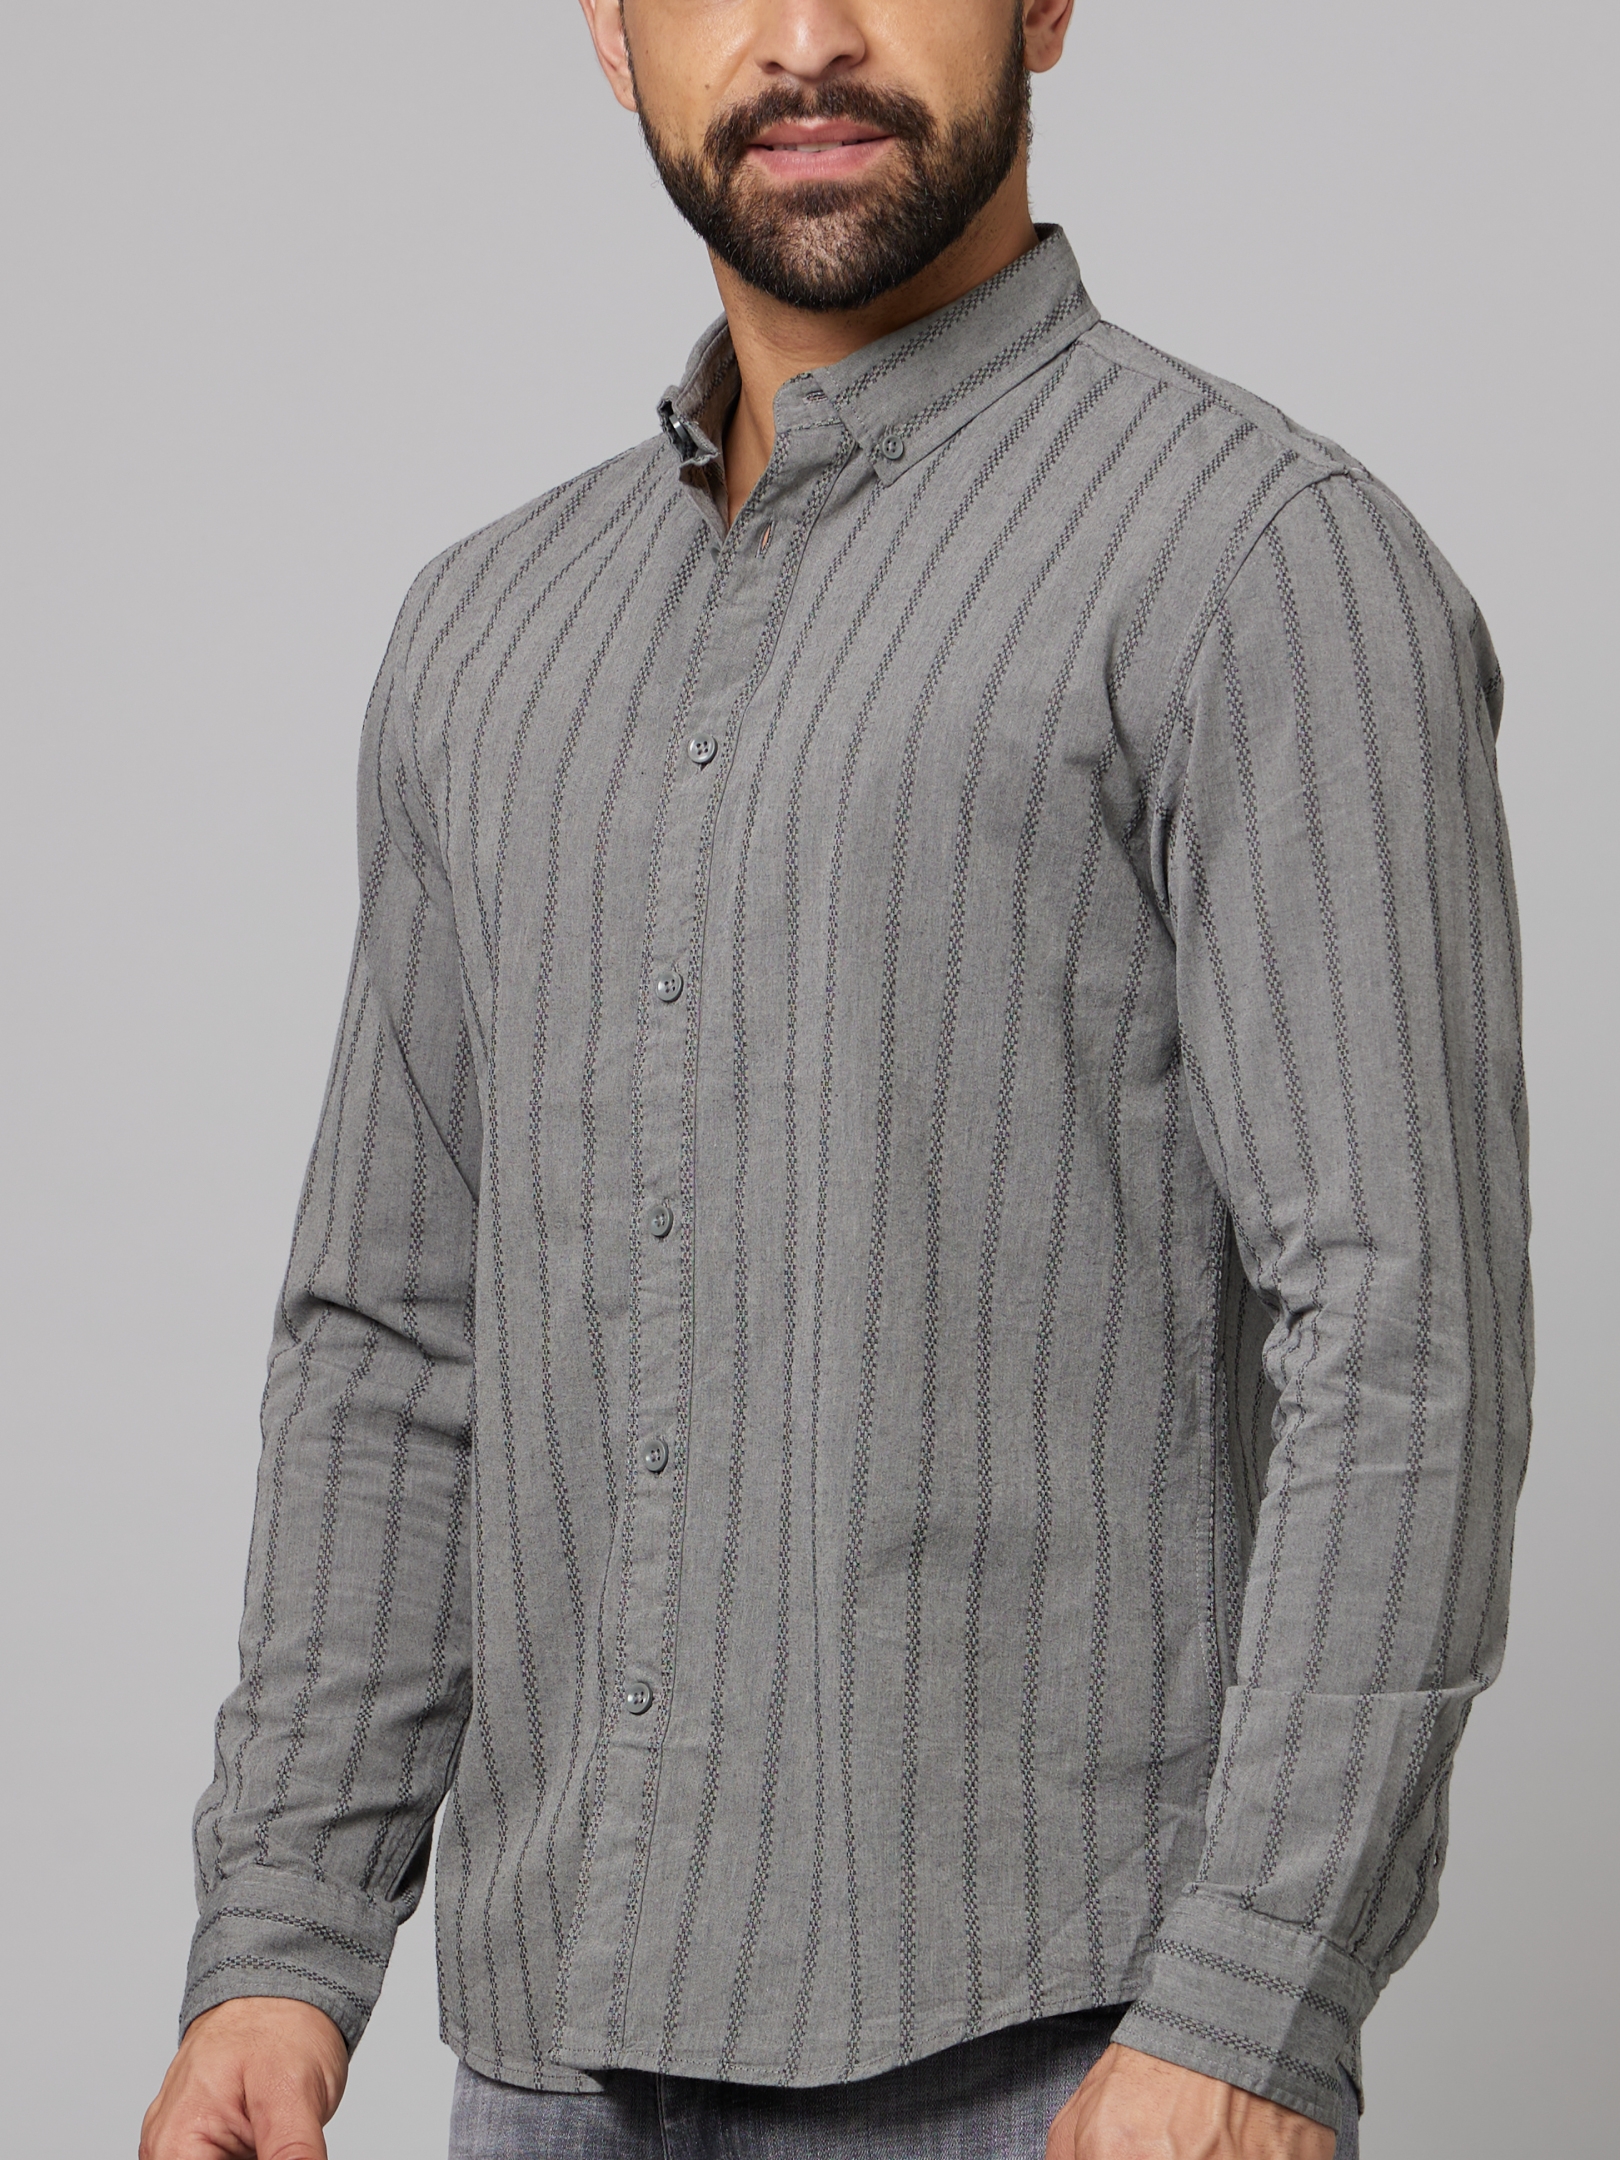 Men's Grey Striped Casual Shirts